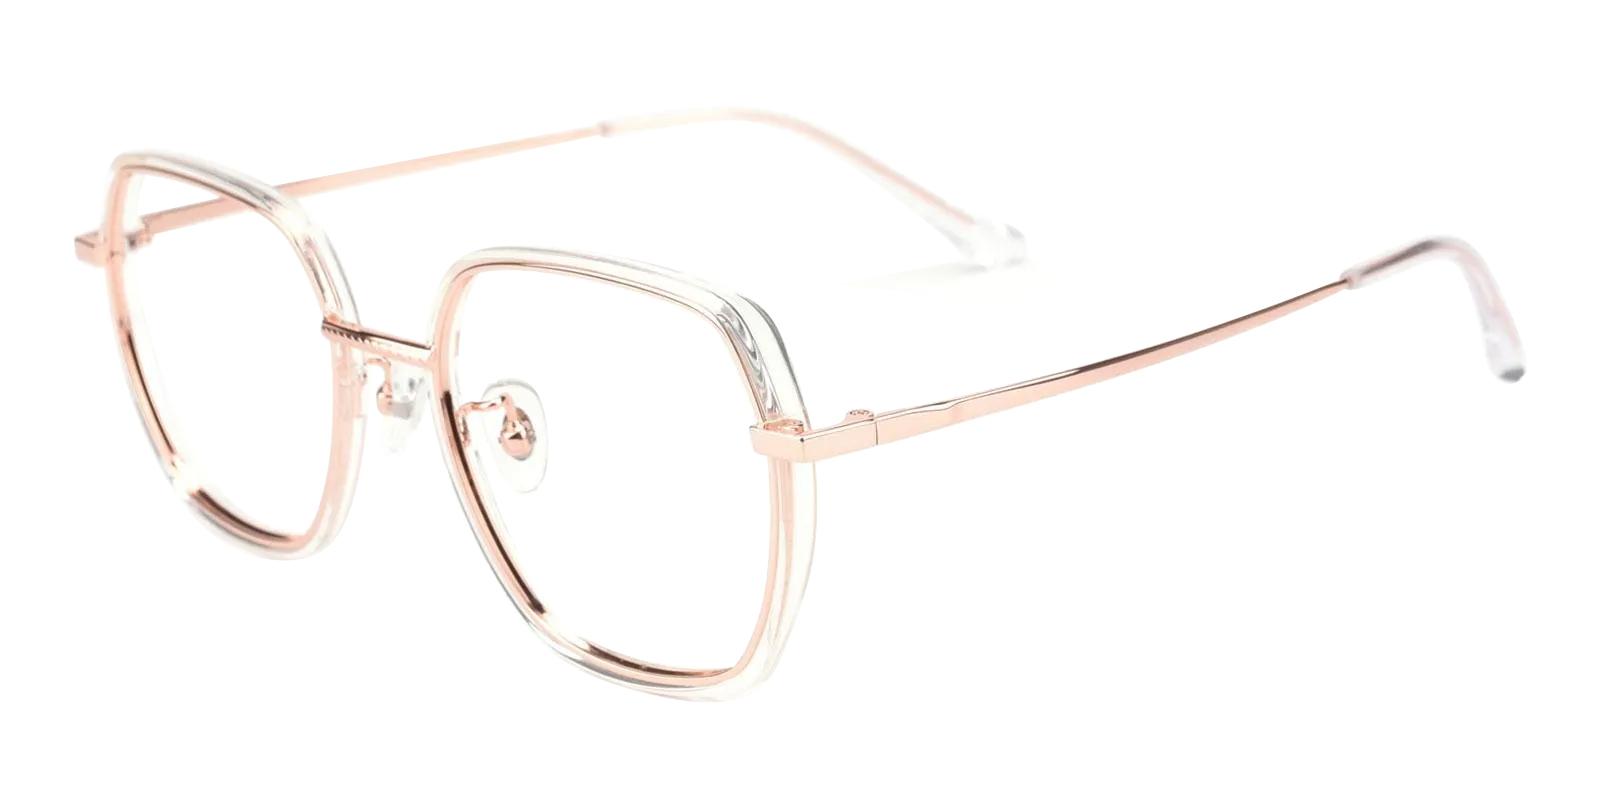 Visitty Fclear Titanium , TR Eyeglasses , NosePads Frames from ABBE Glasses